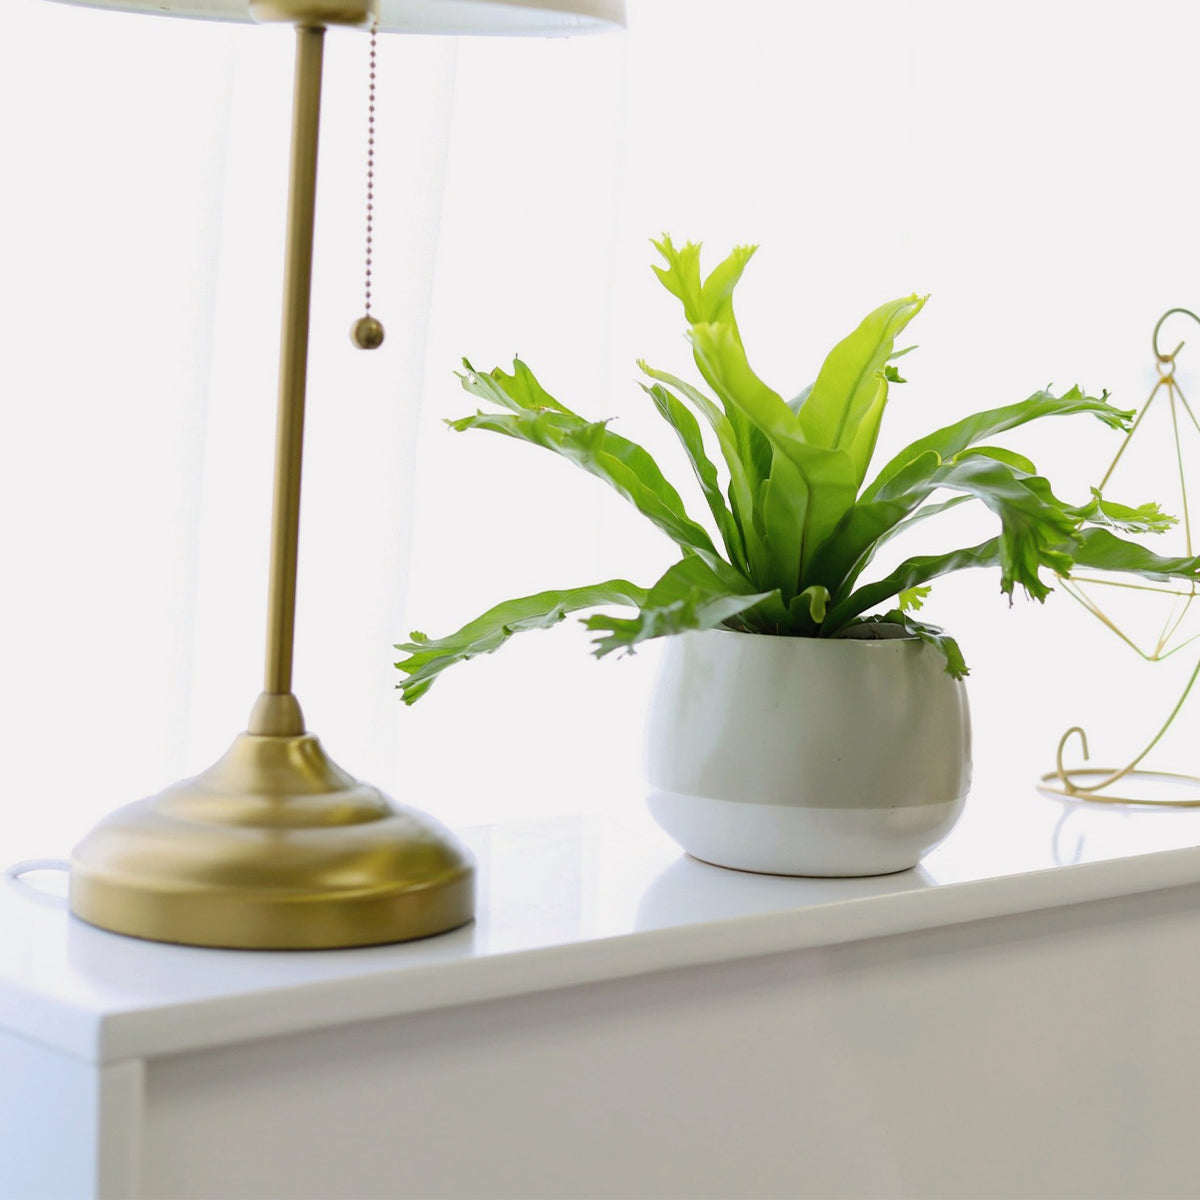 4 inch Crissie Fern houseplant for sale online, Crissie Fern in decorative pot decor ideas